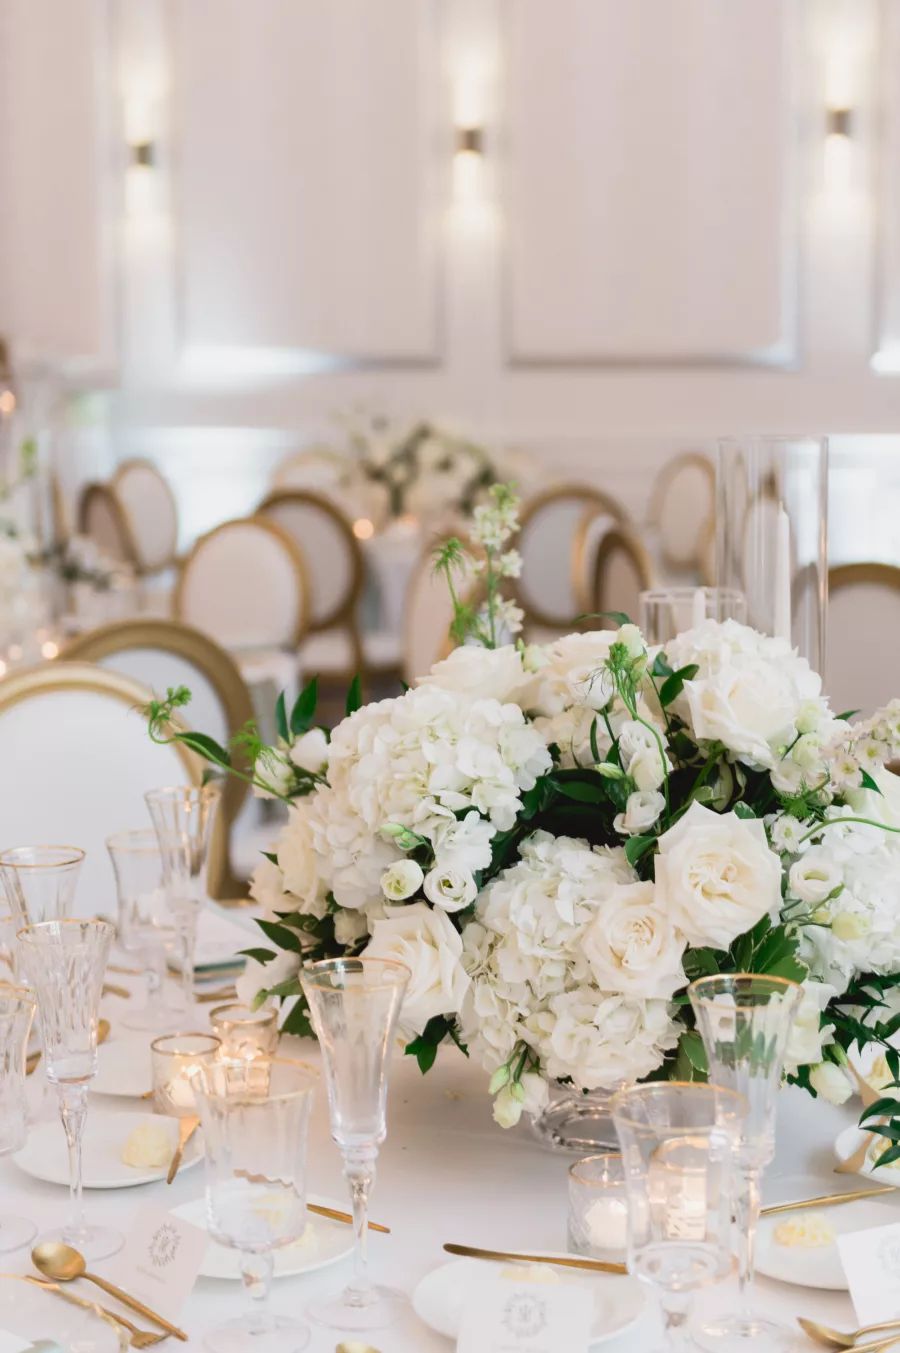 Elegant Spring White and Gold Ballroom Wedding Centerpiece Decor Ideas | White Hydrangeas, Roses, and Greenery | Tampa Bay Florist Bruce Wayne Florals